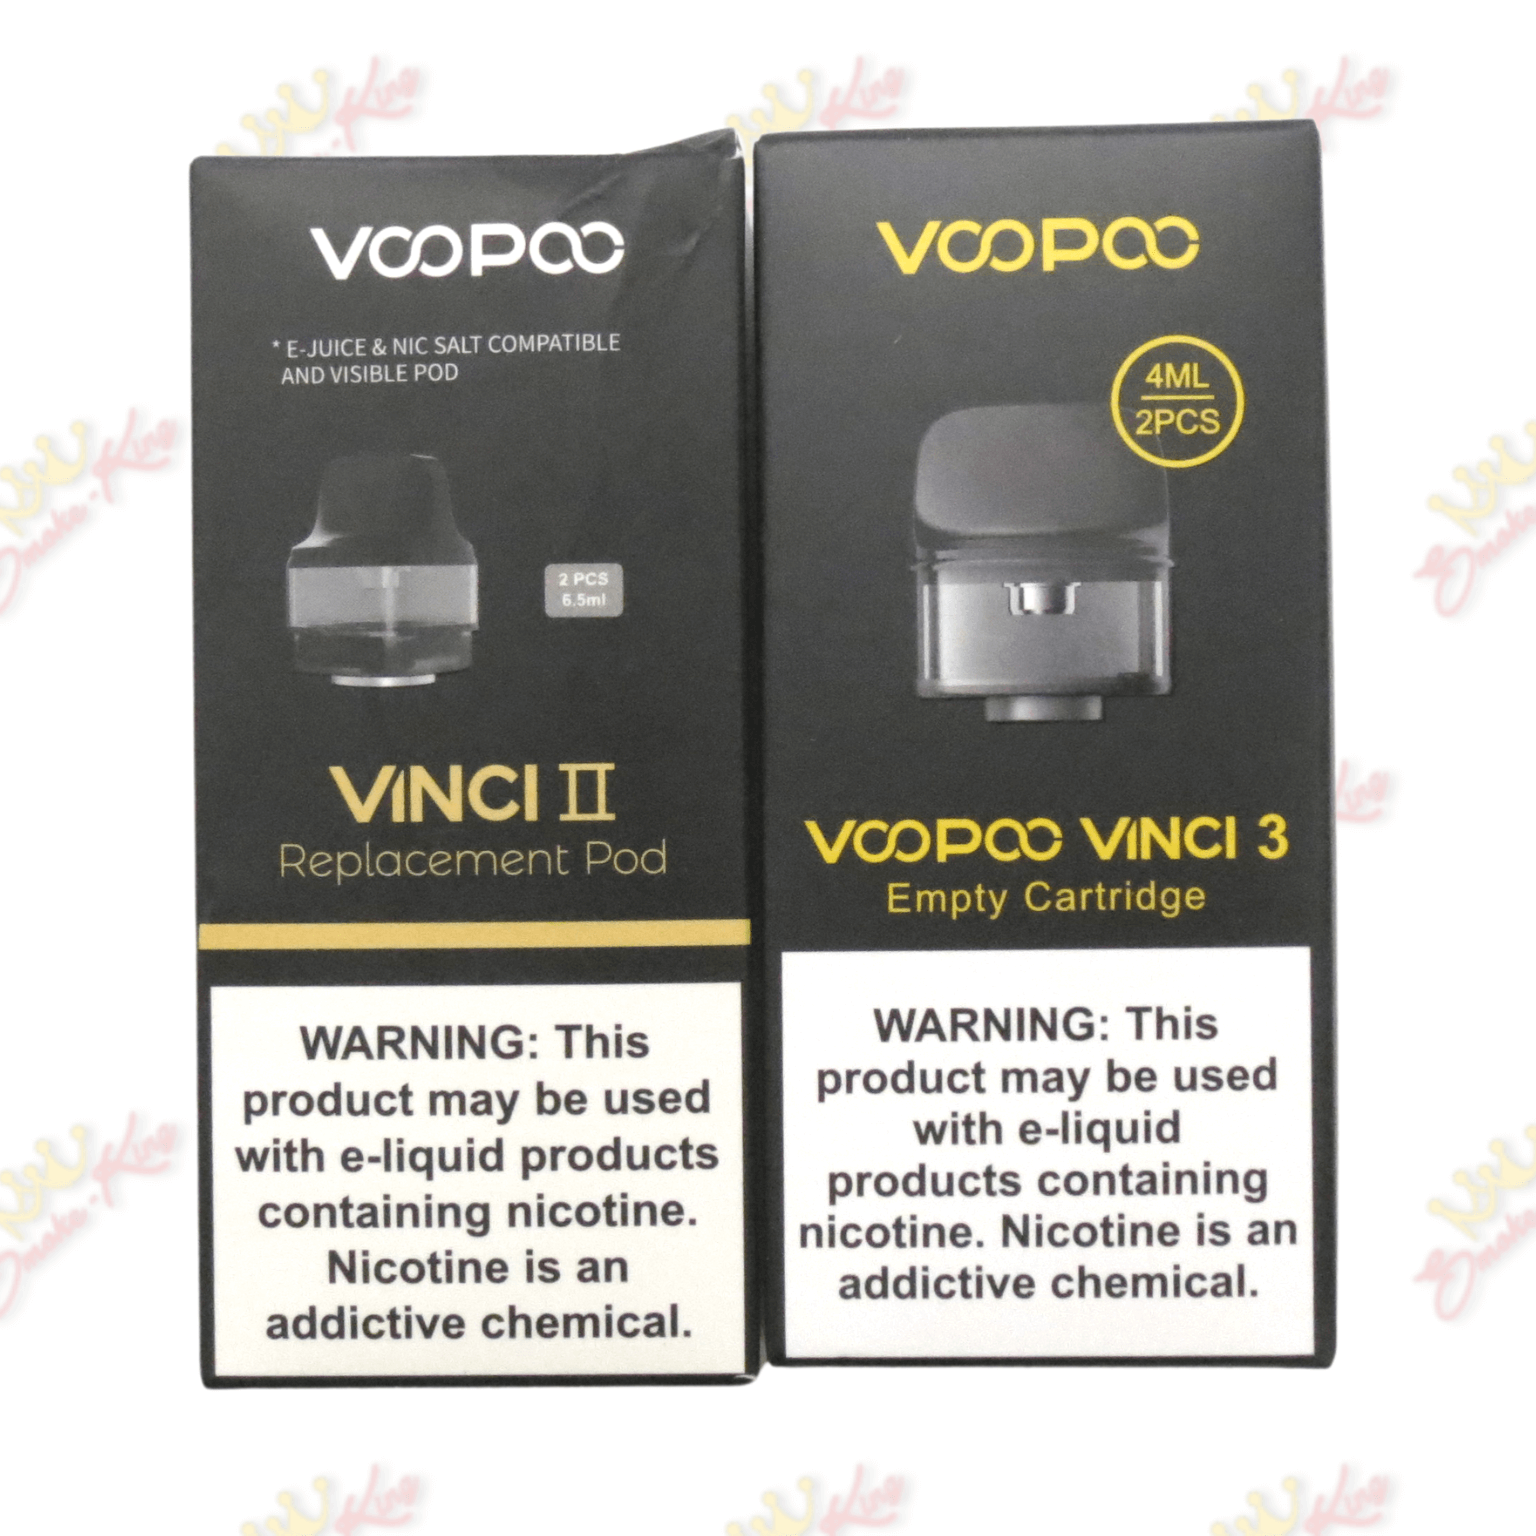 Smoke King Voopoo Vinci Series Pods Voopoo Vinci Series Pods | Vape Accessory | Smoke-King